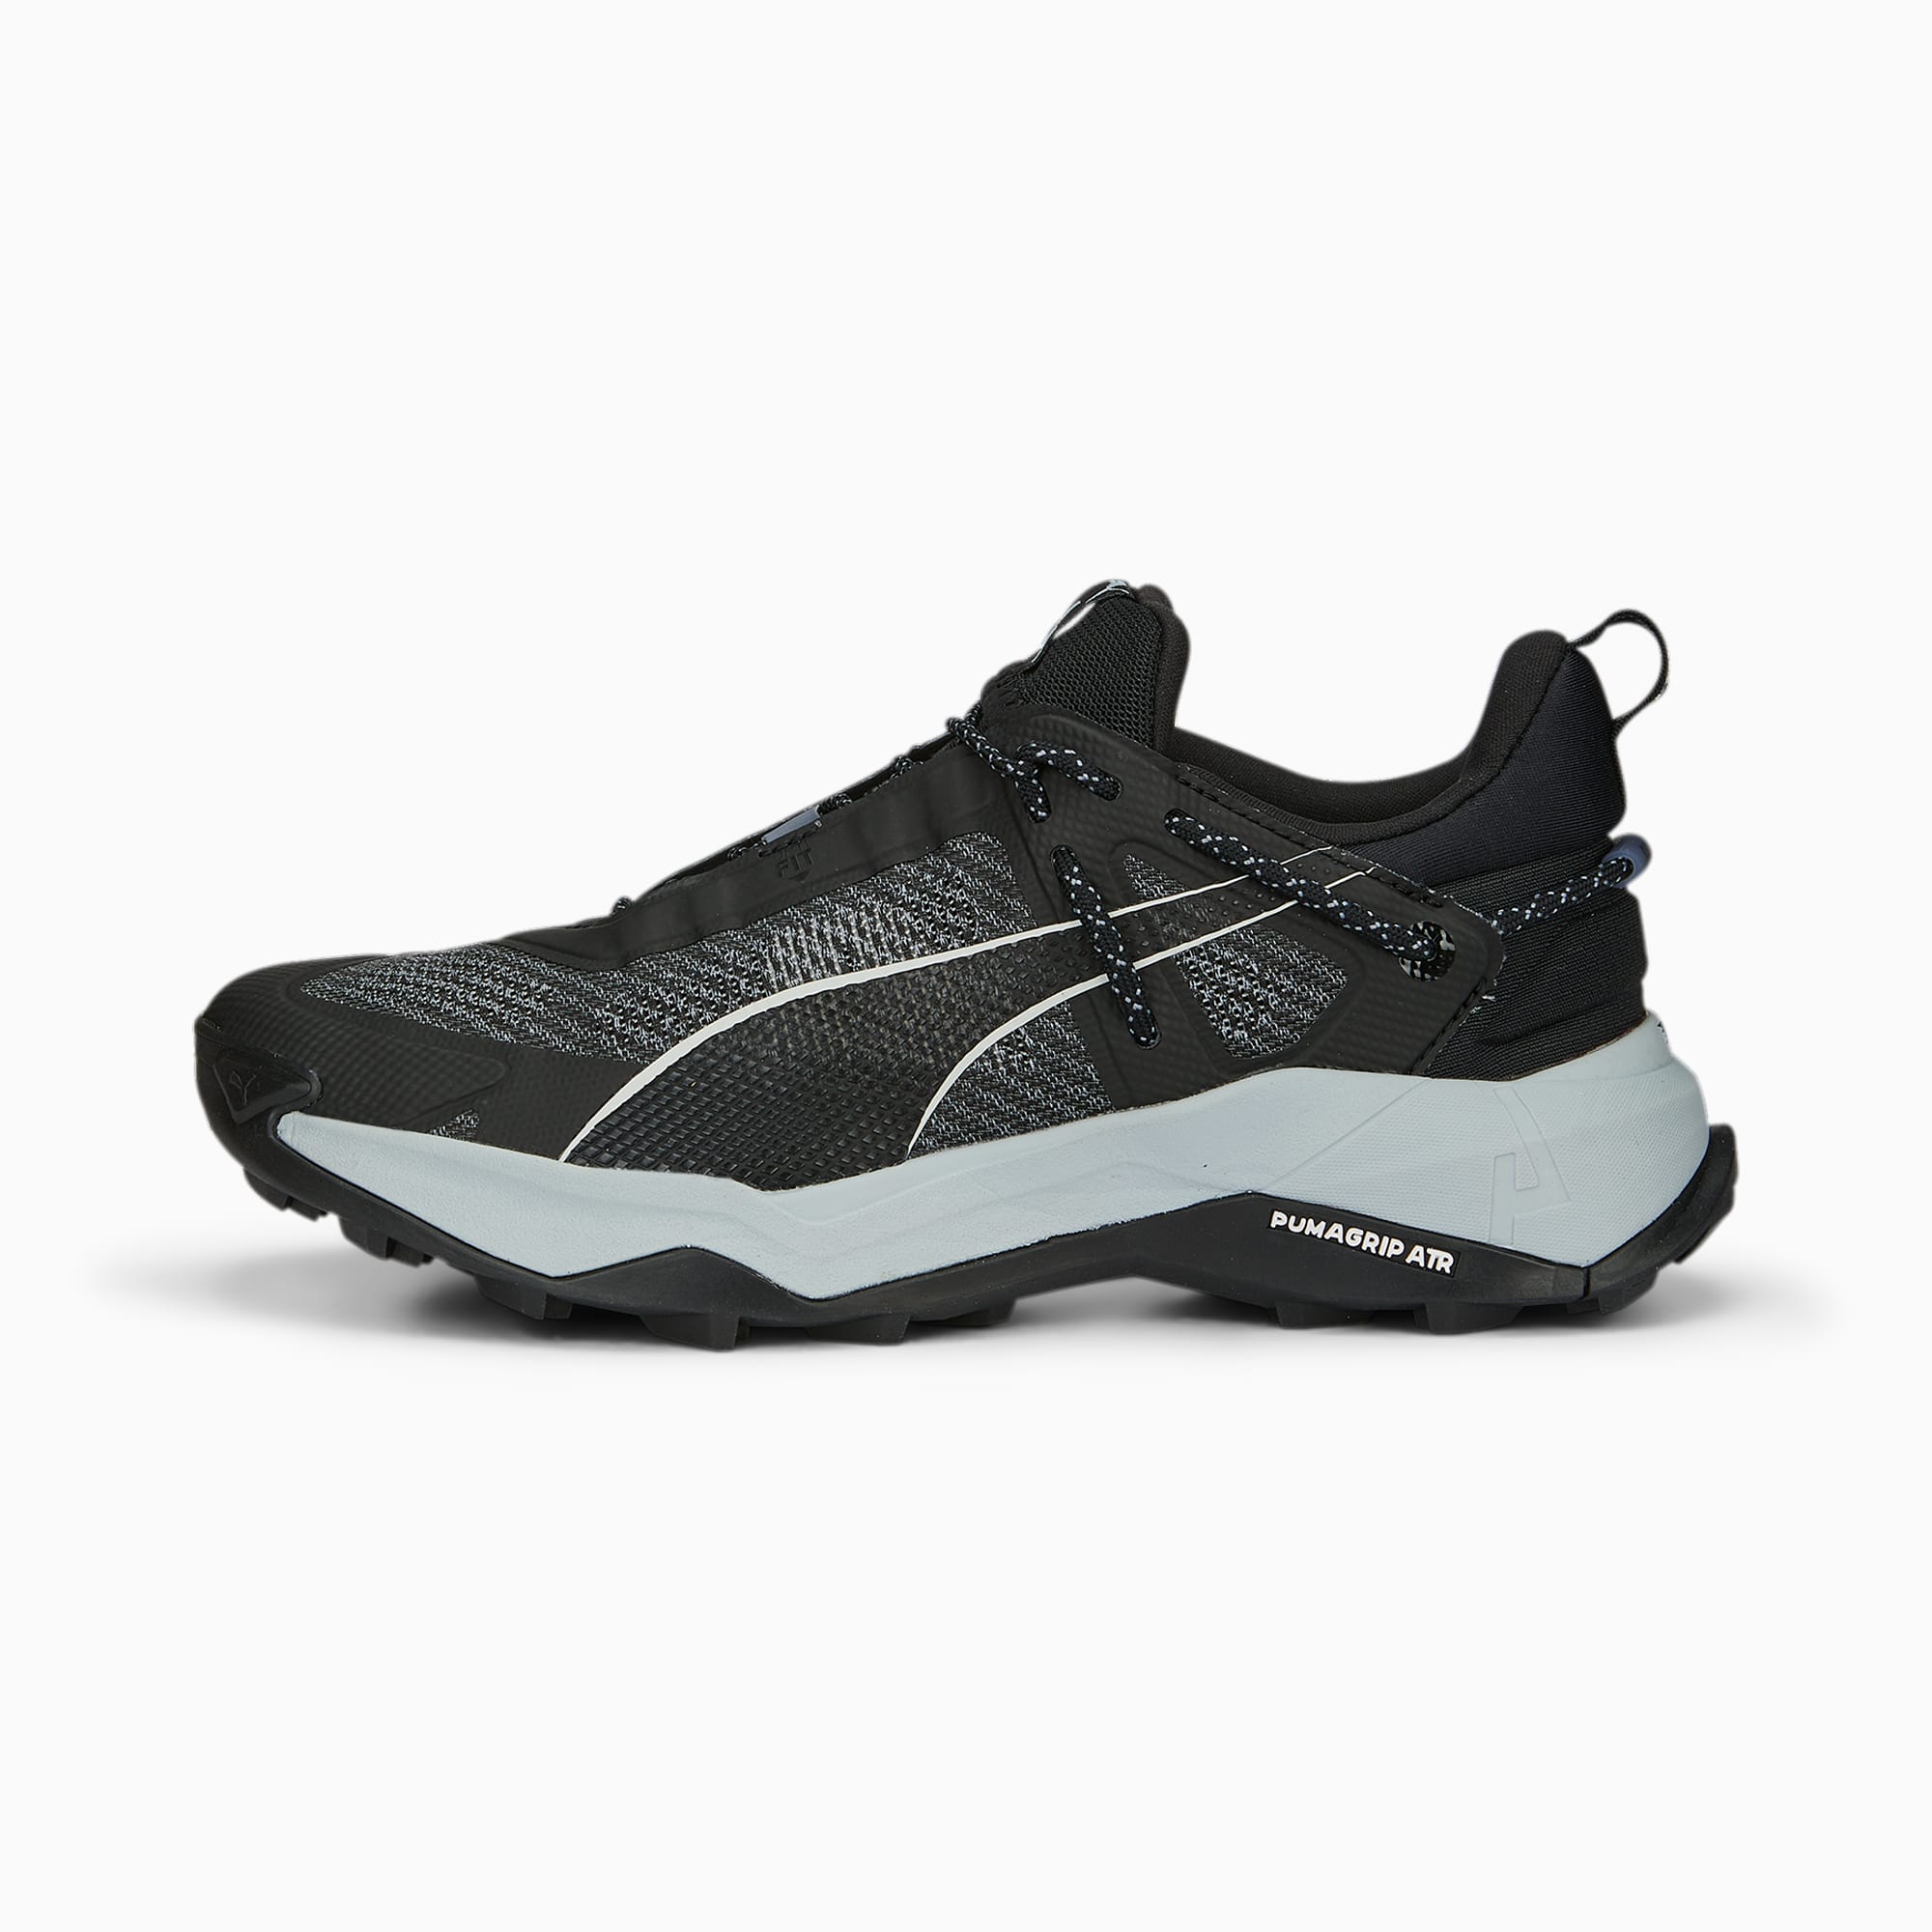 PUMA Explore Nitro™ Women's Hiking Shoes, Black/Platinum Grey